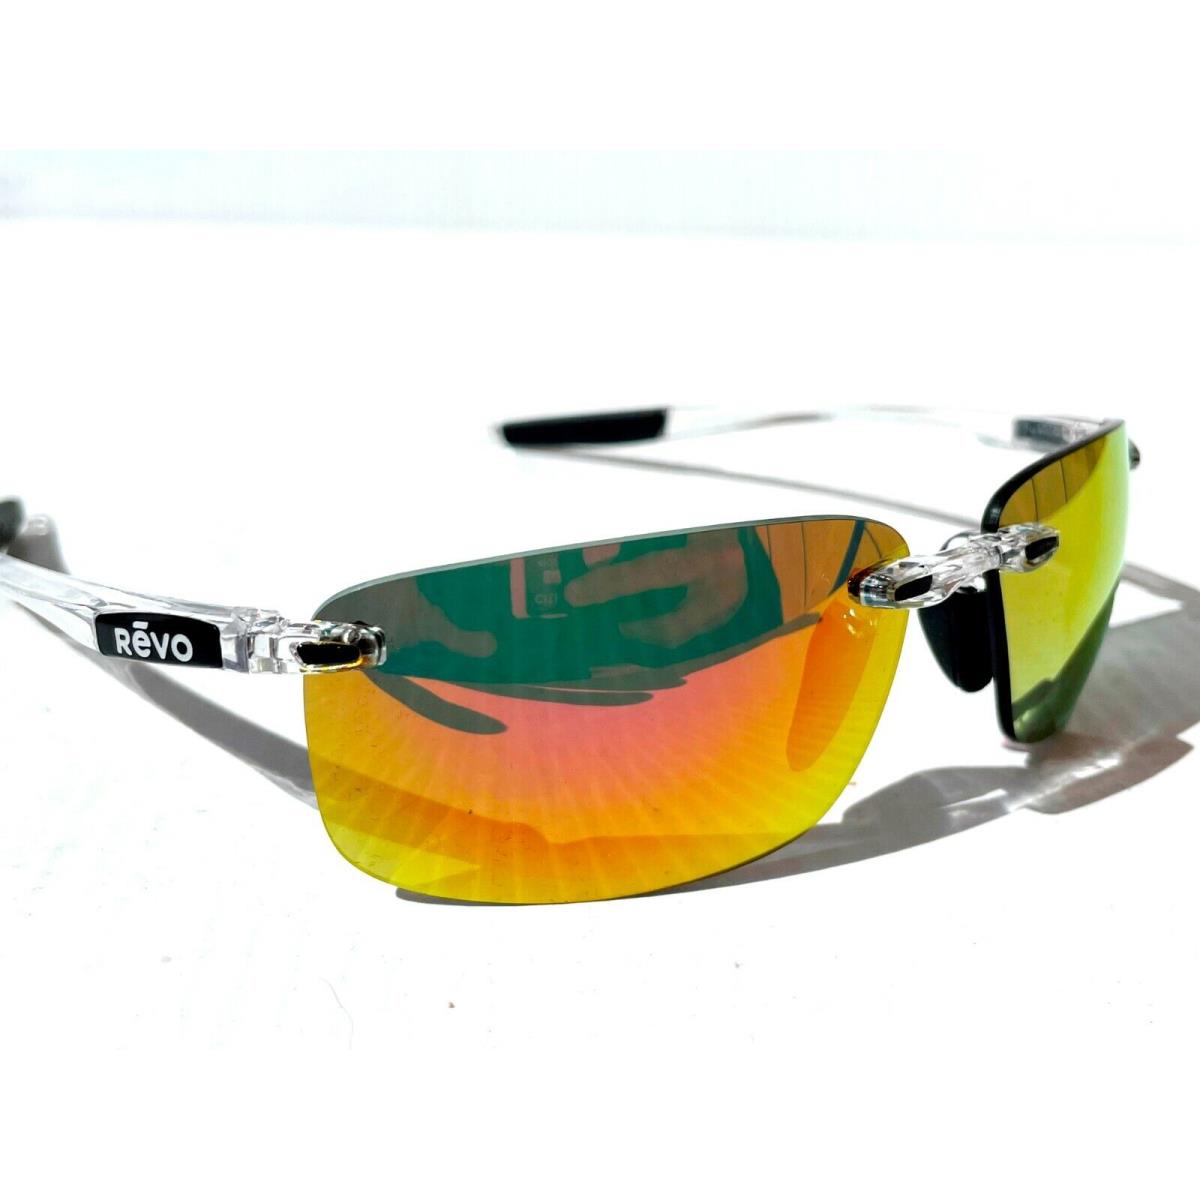 Revo sunglasses Descend - Clear Frame, Ruby Lens